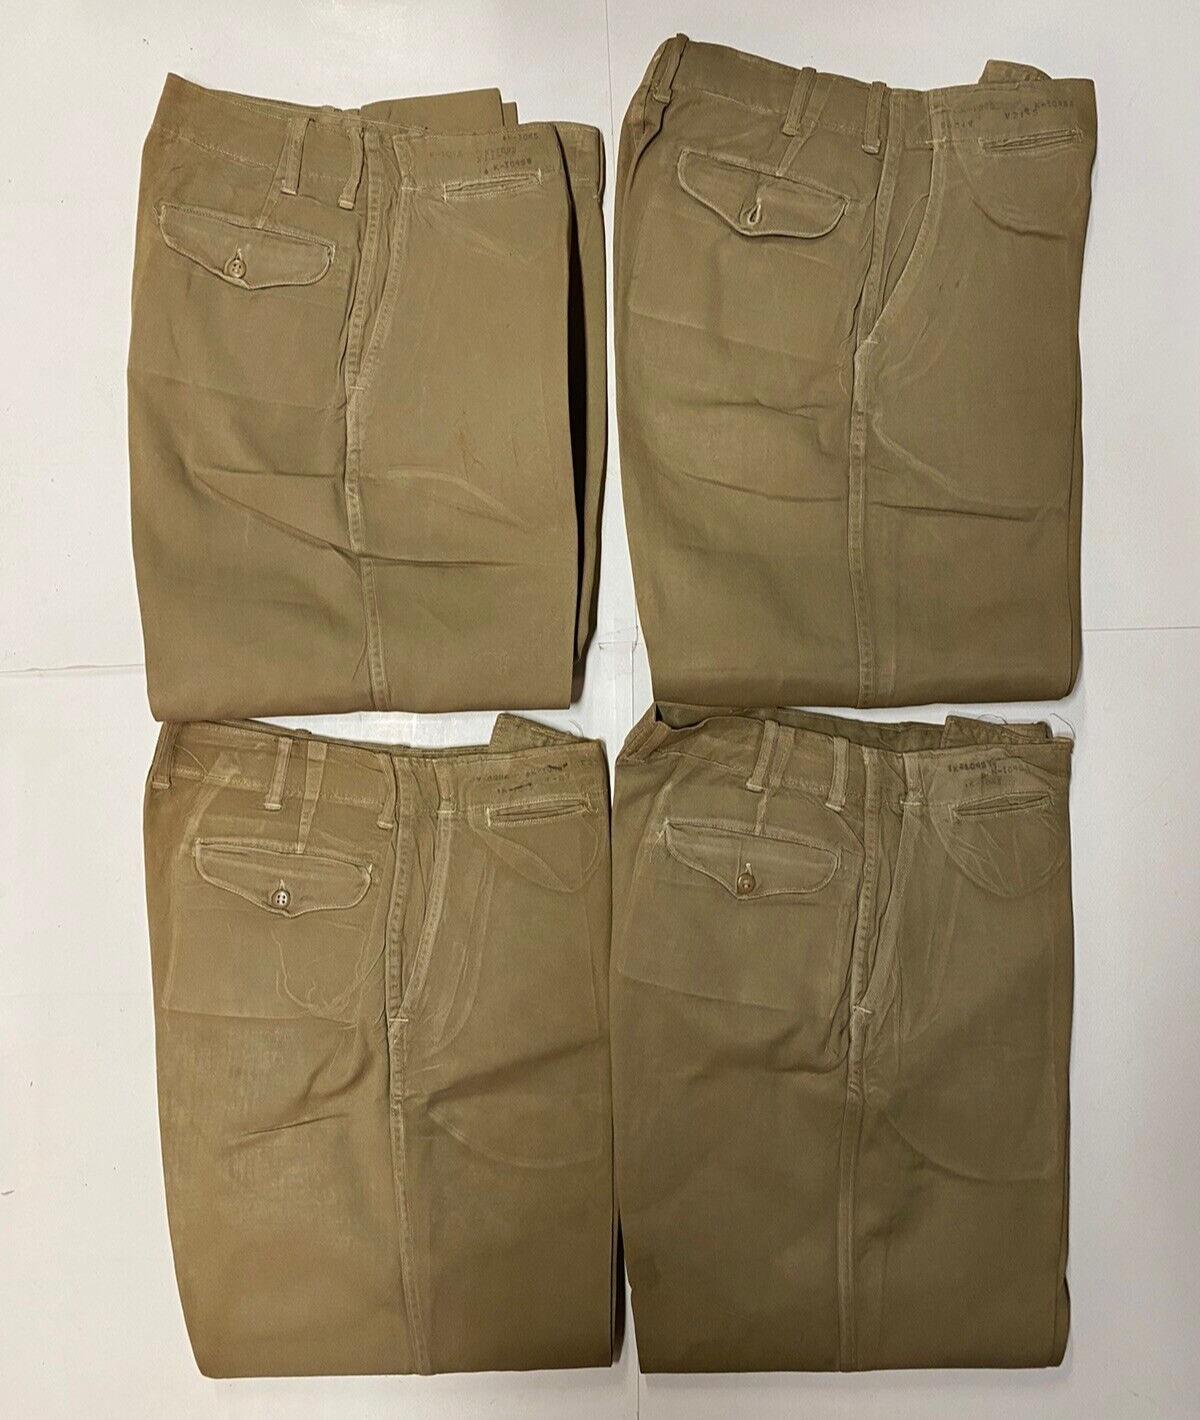 Lot of 4 Vintage WW2 Pants Size 28 X 28 Khaki Twill Cotton 1940s Button Fly USMC